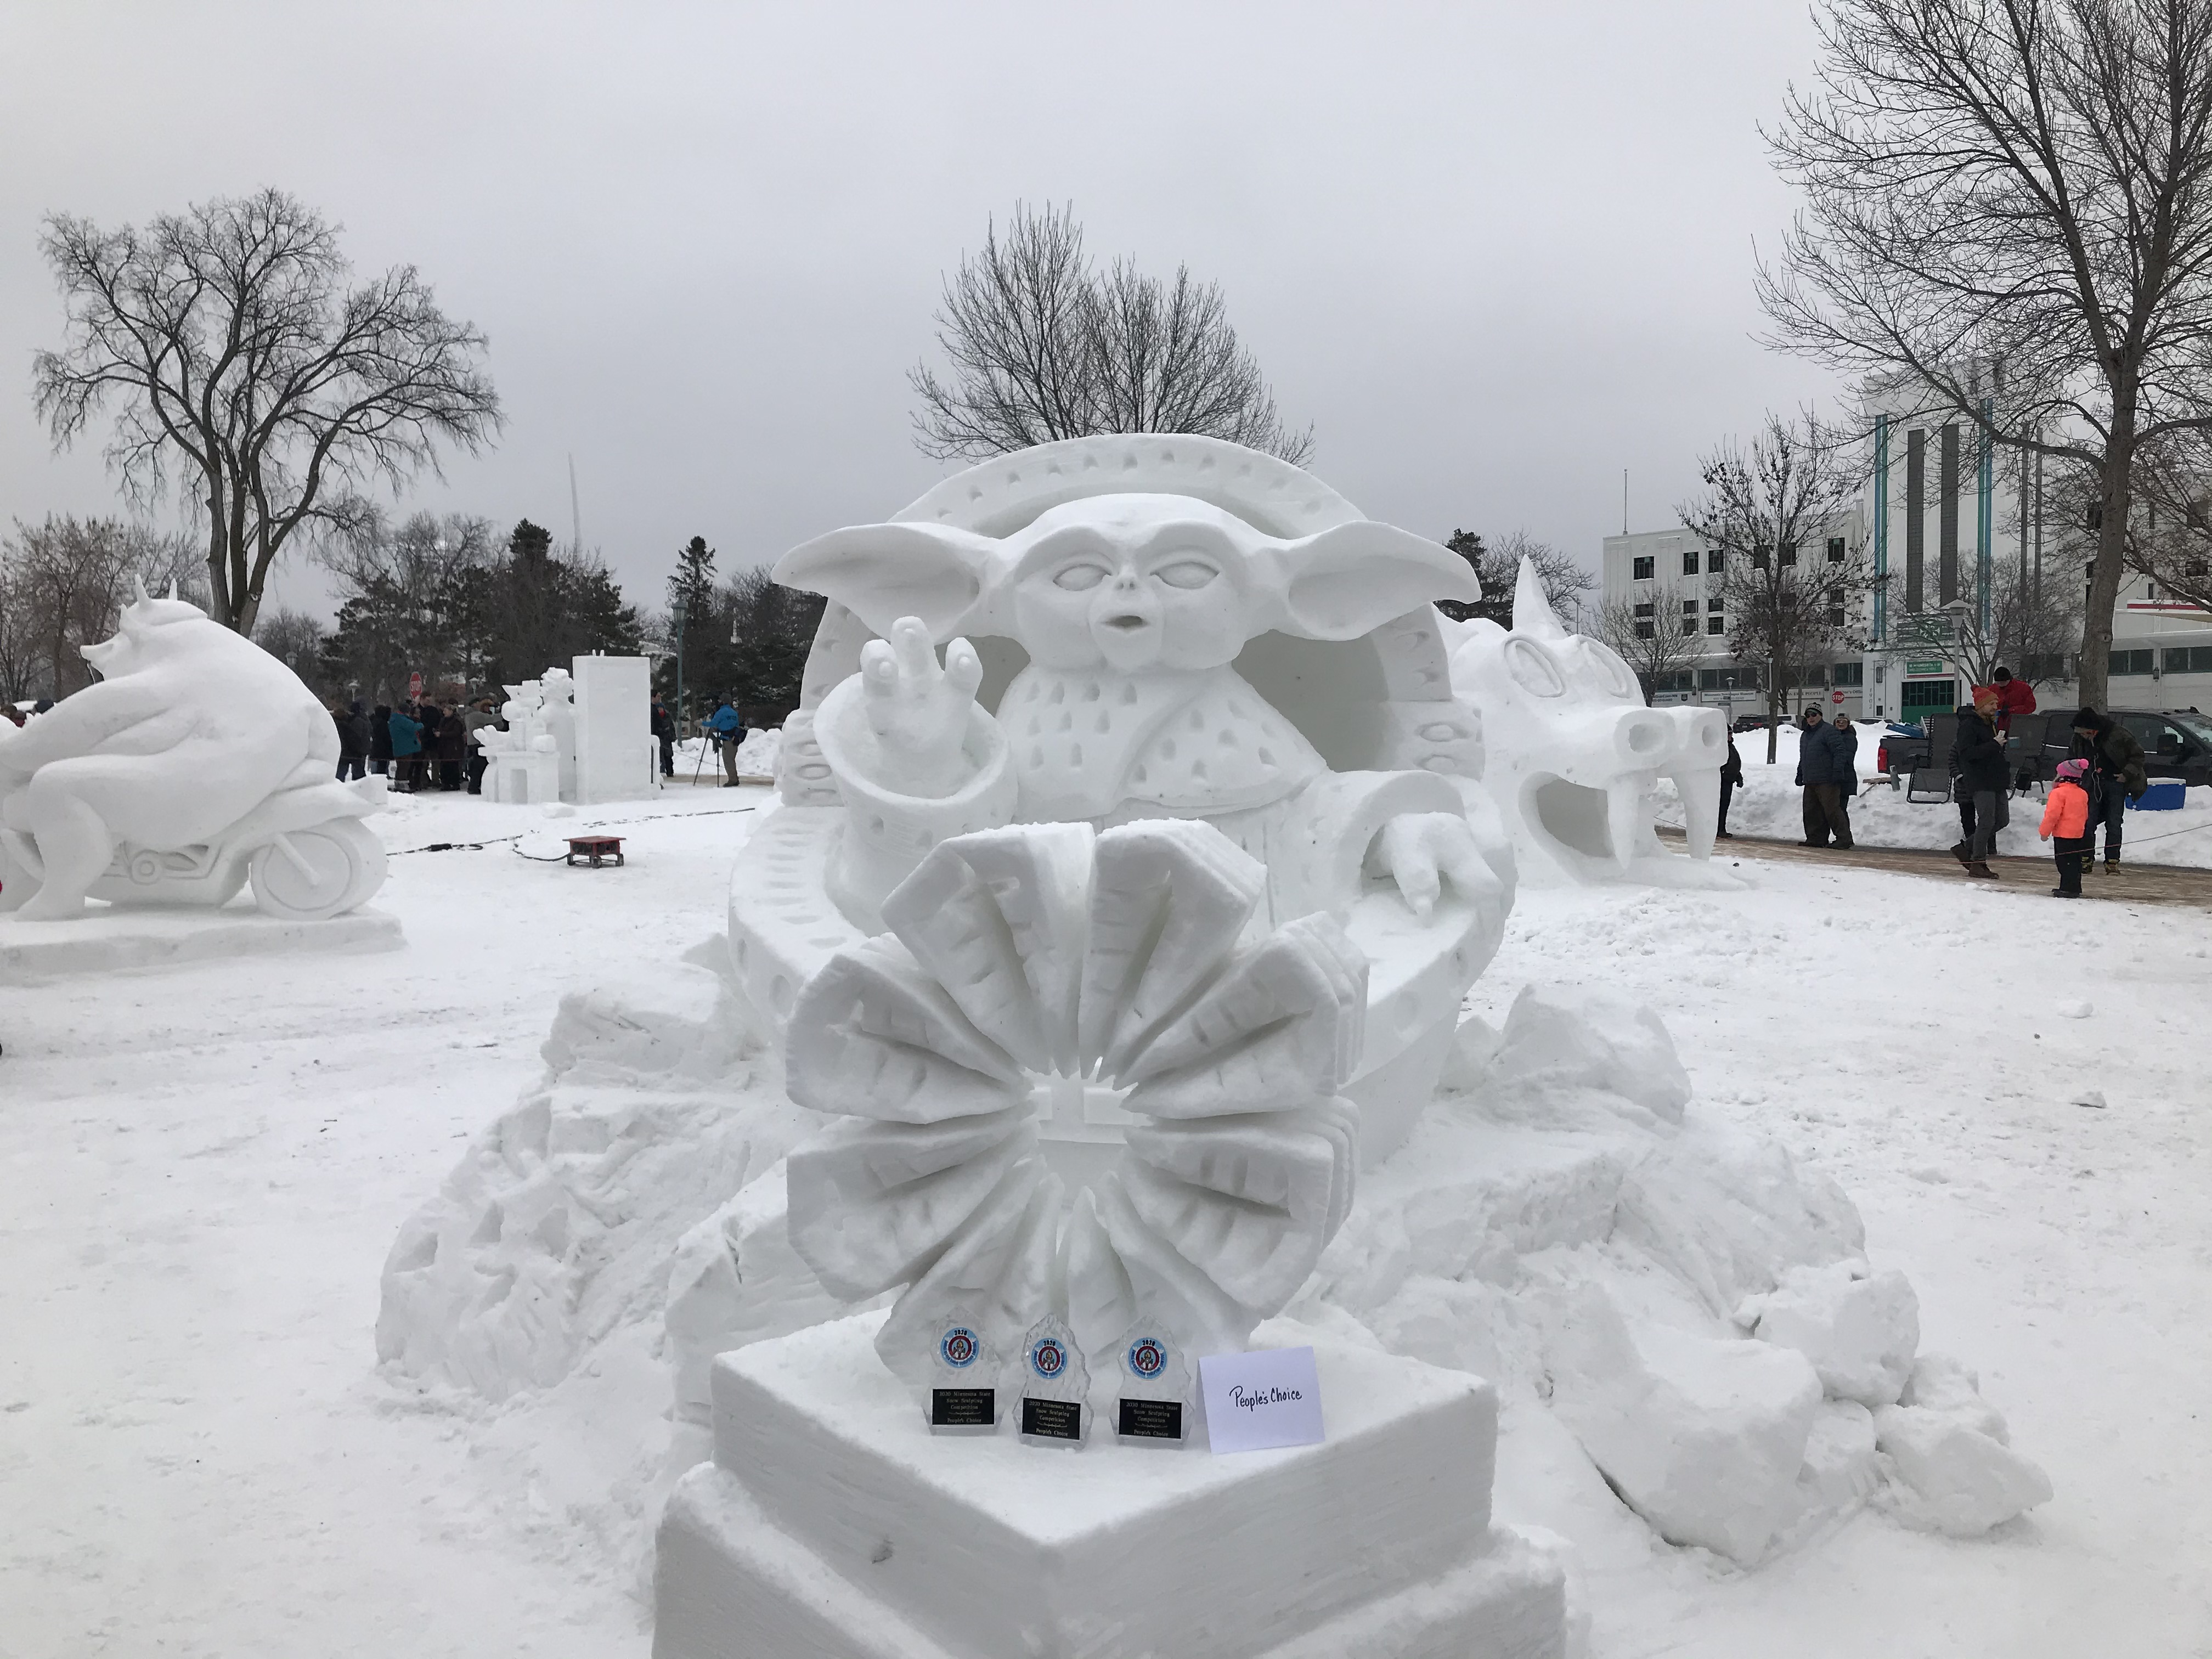 "The Asset" snow sculpture created by the Pig’s Eye Pirates team for the 2020 Saint Paul Winter Carnival in Saint Paul, Minn. (Jason Moe)